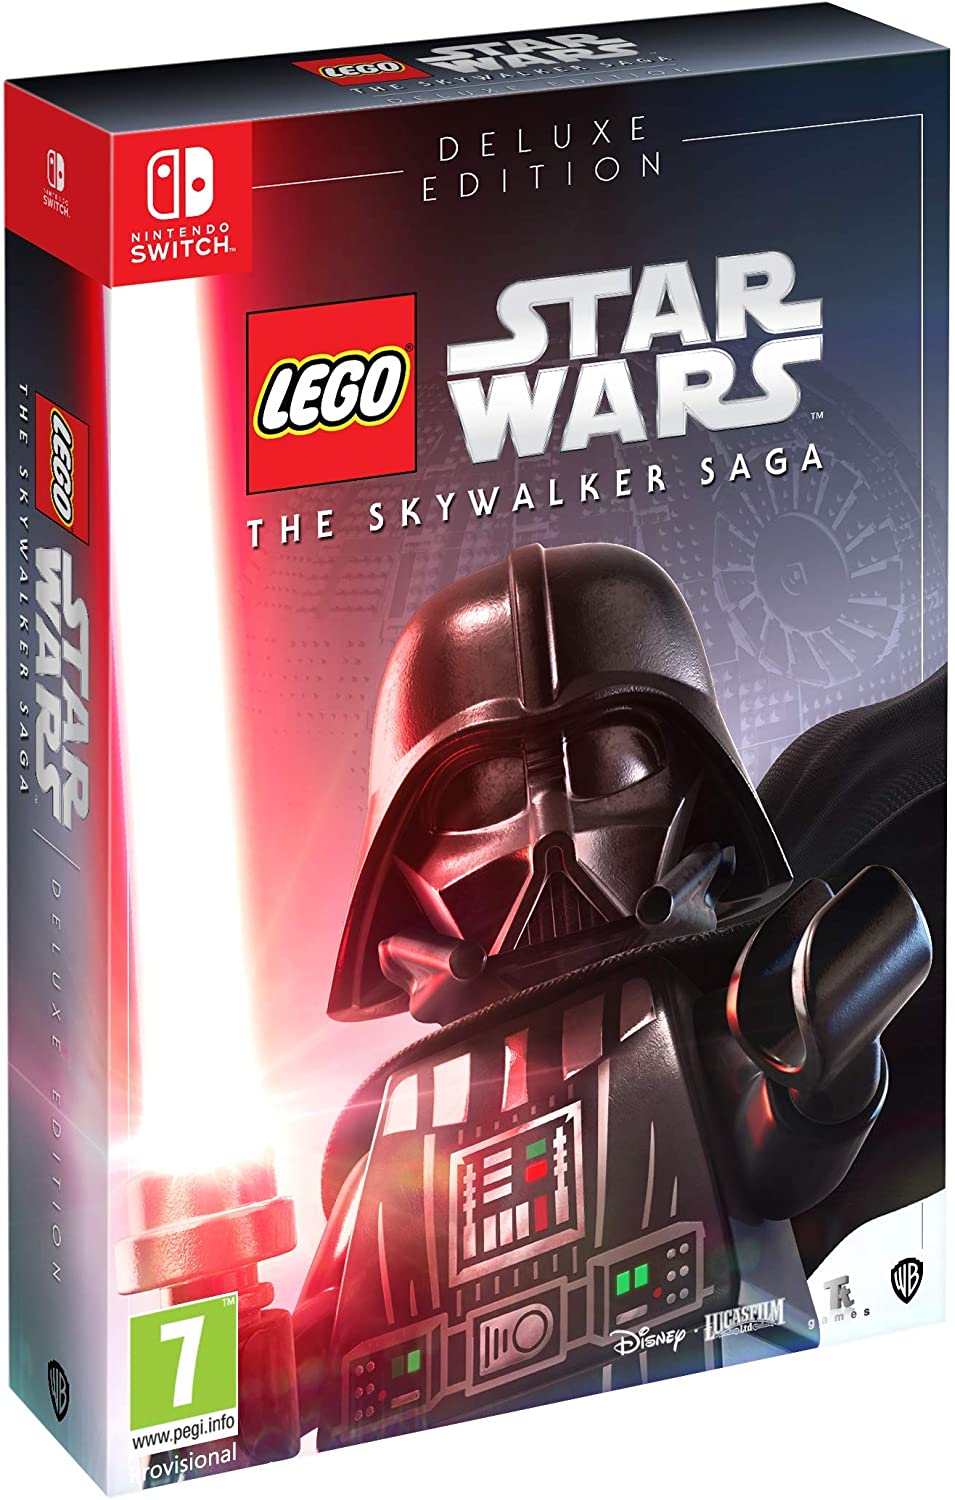 LEGO Star Wars: The Skywalker Saga - Deluxe Edition (Switch), Warner Bros